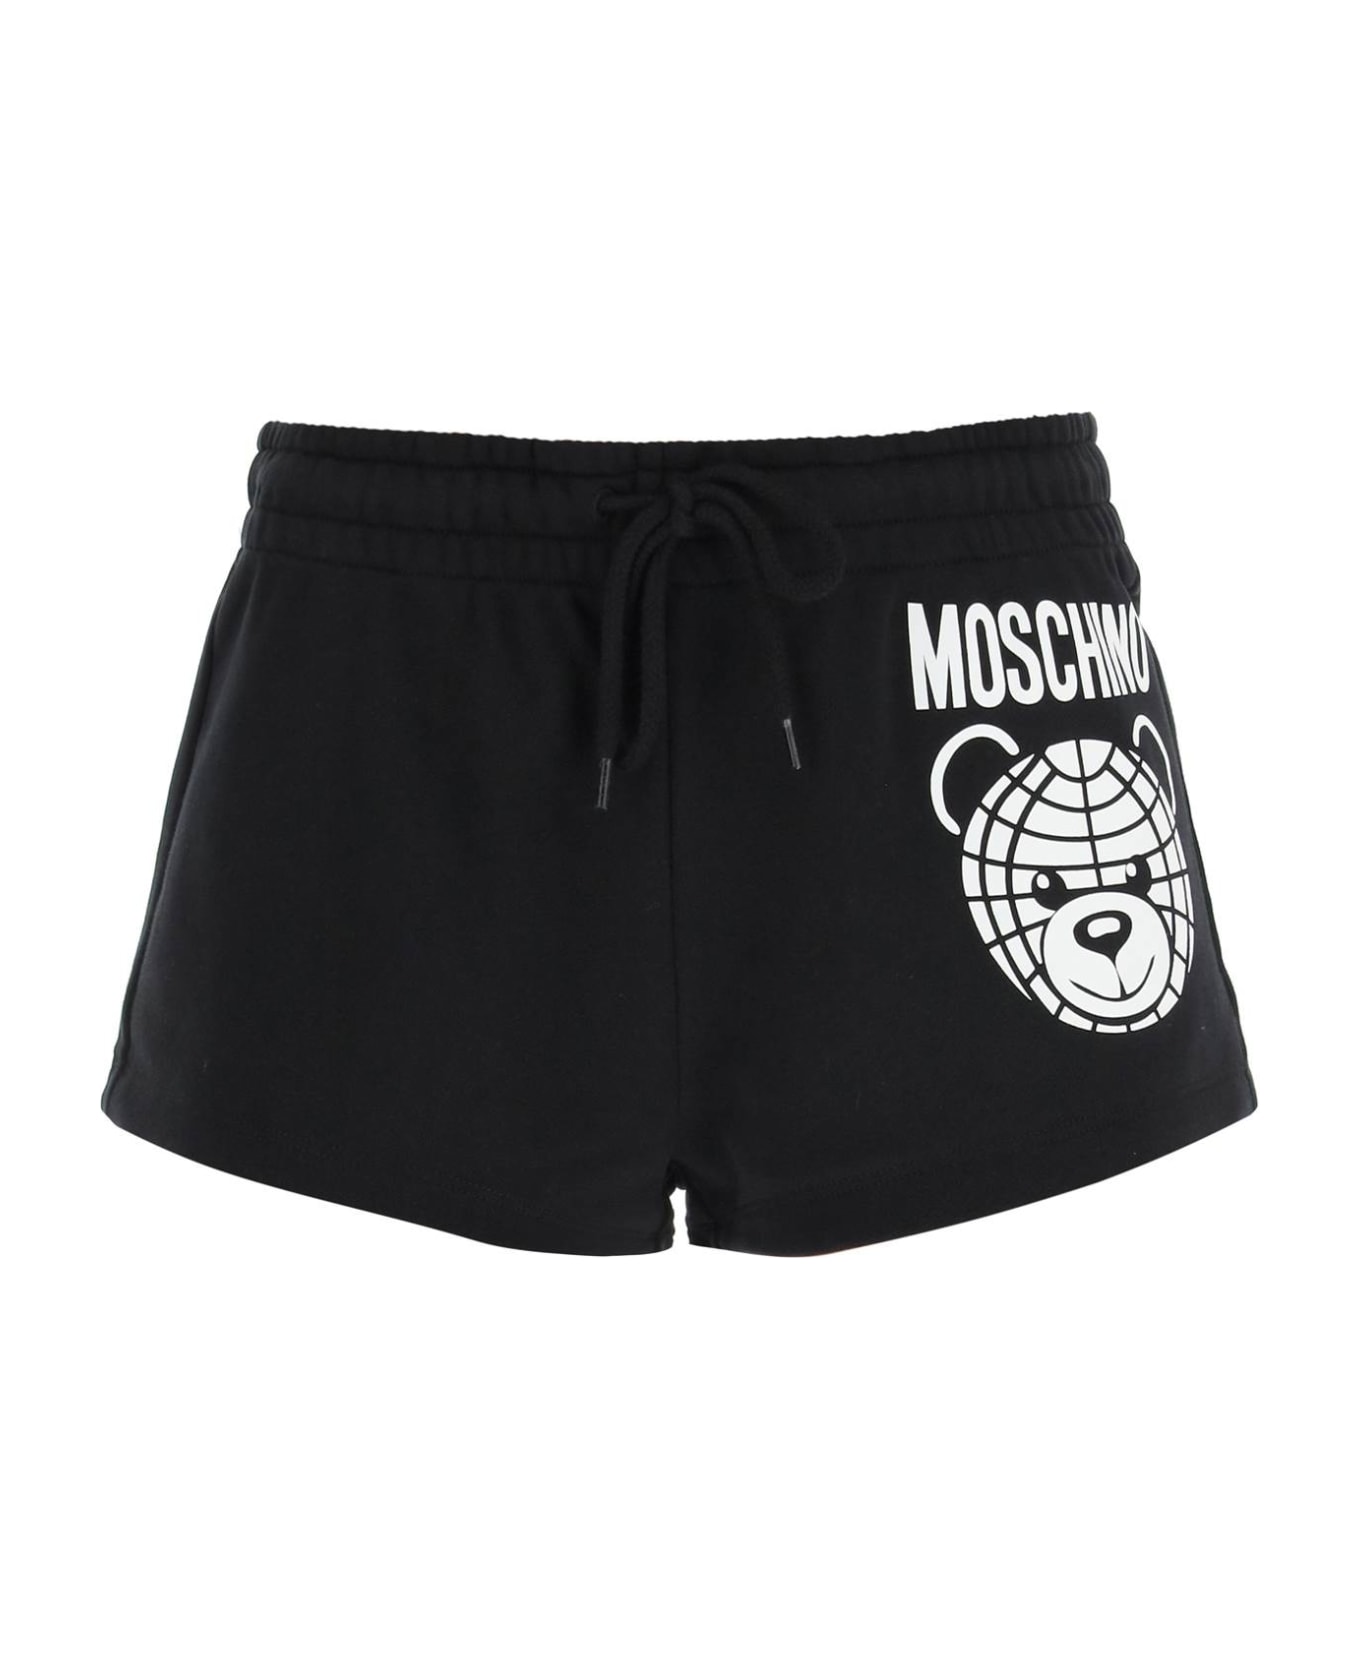 Moschino Sporty Shorts With Teddy Print - FANTASIA NERO (Black)